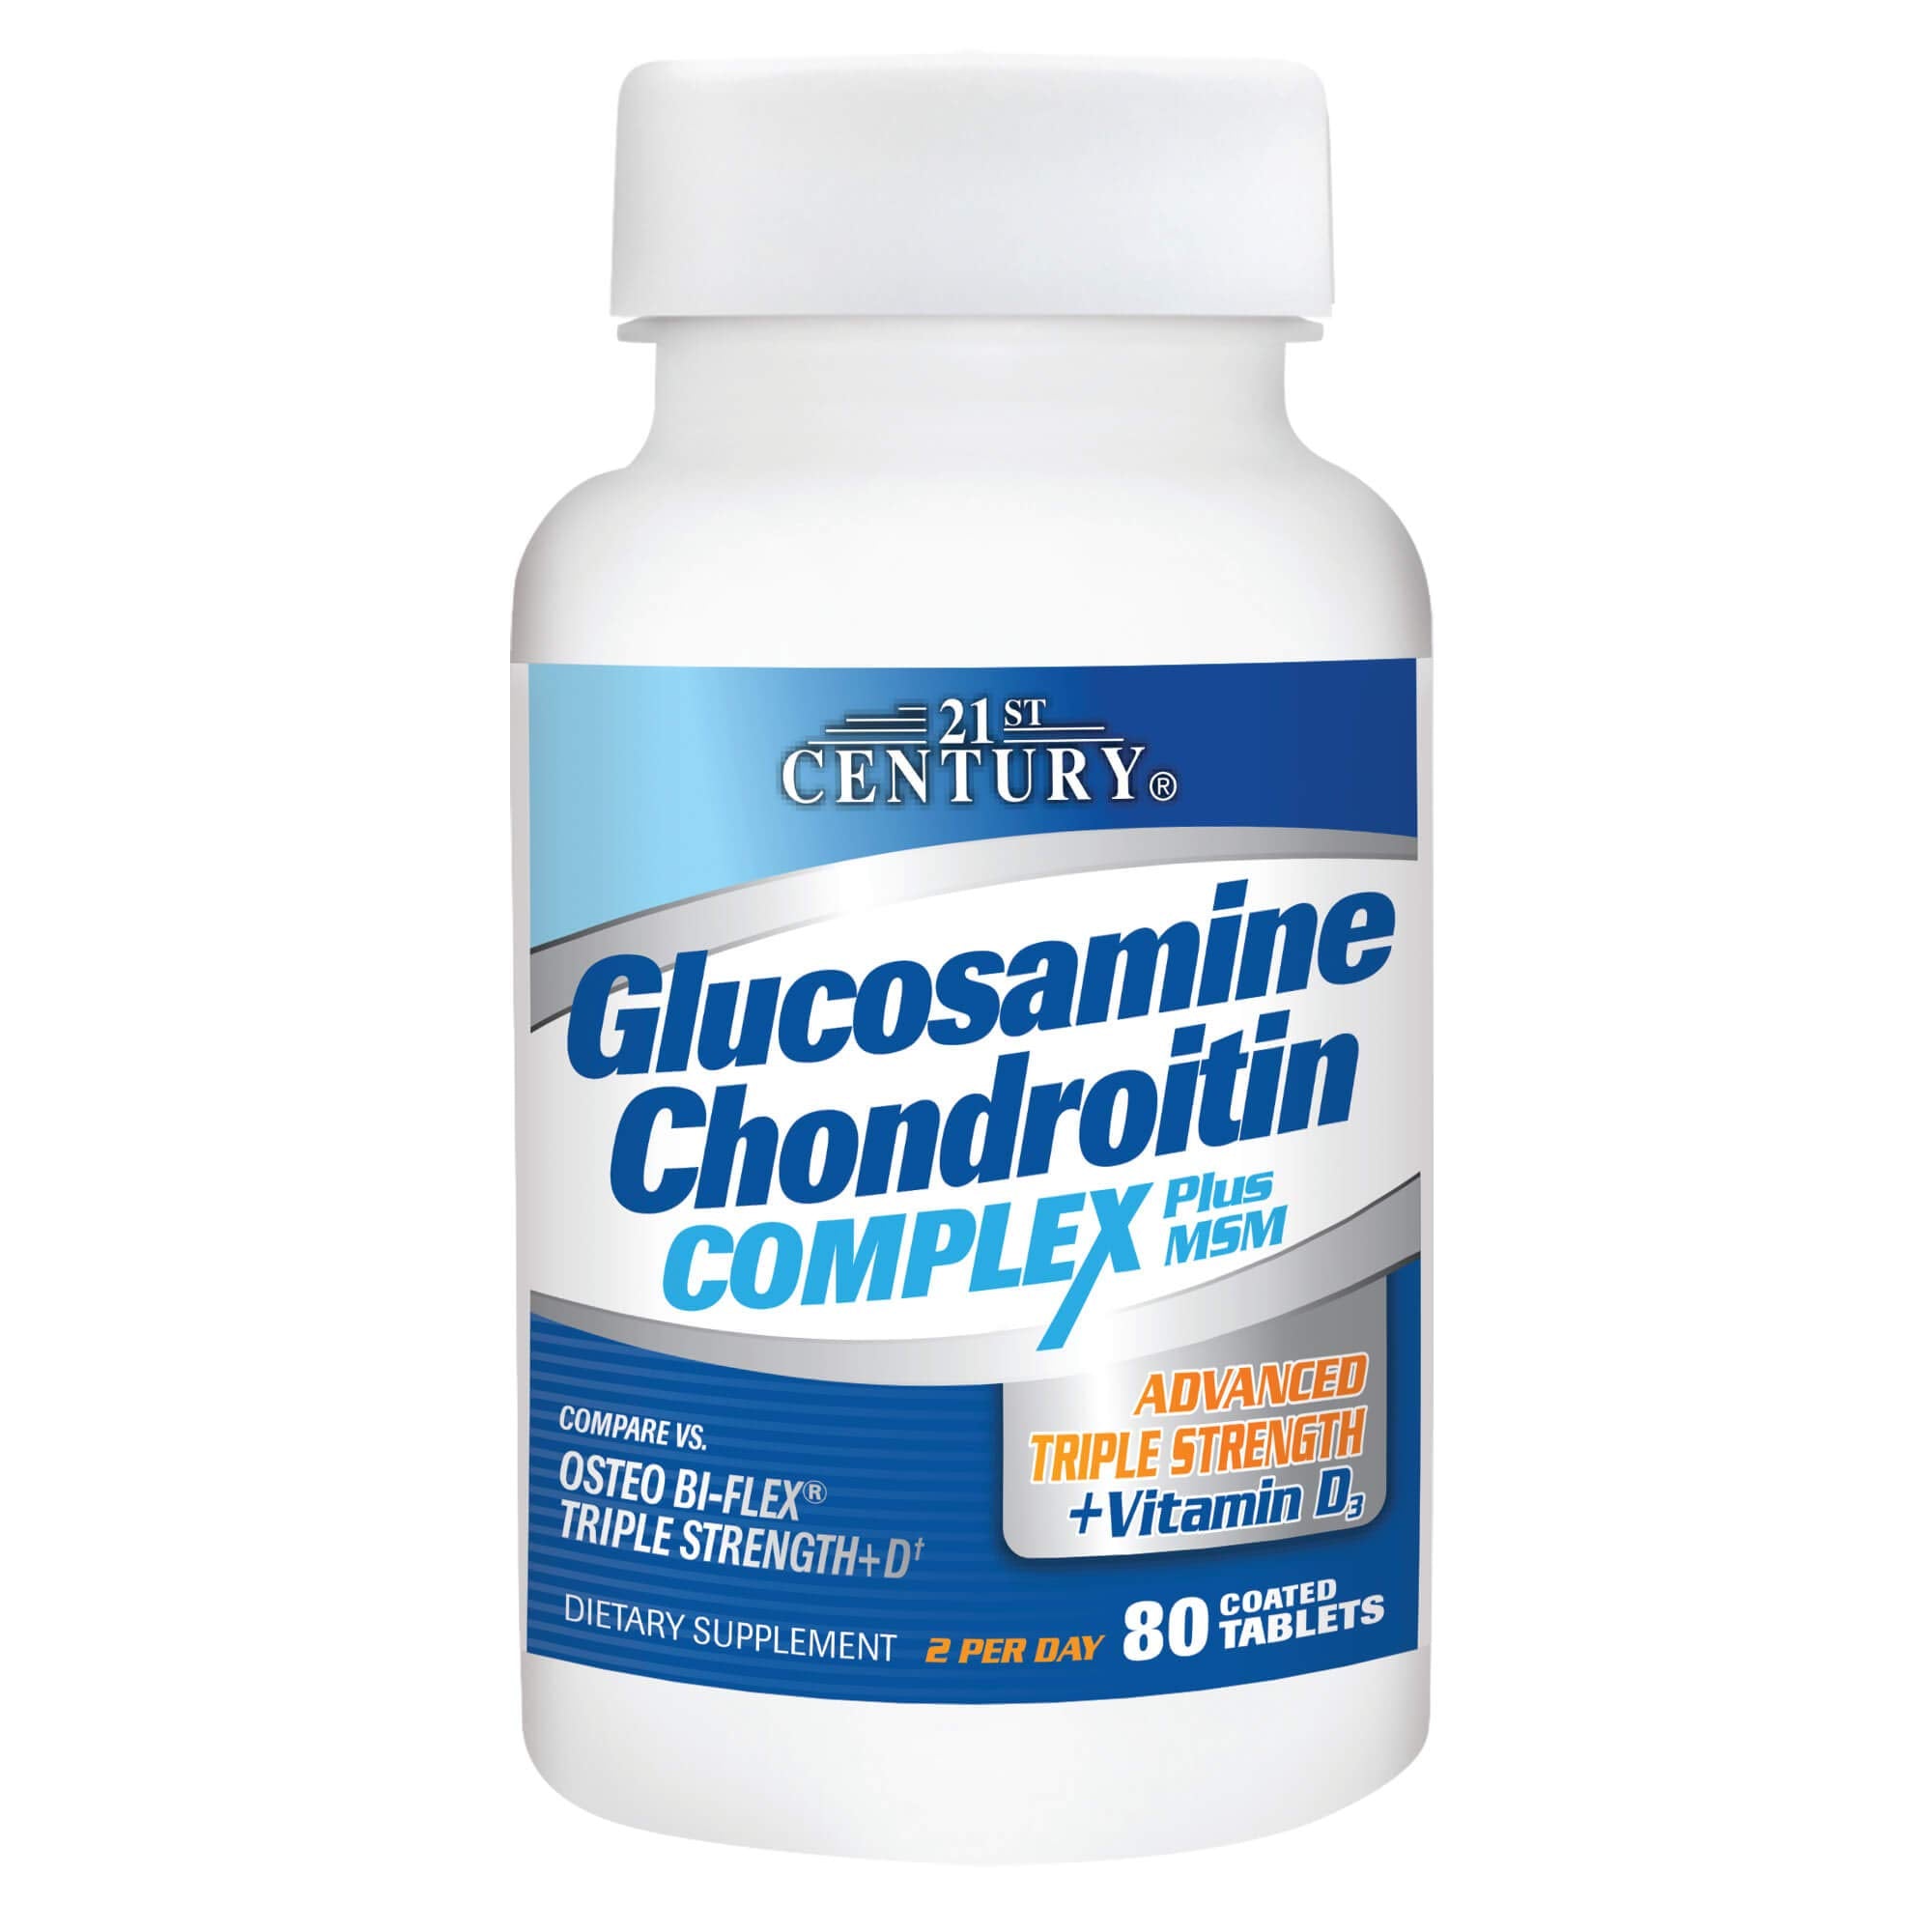 21st Century Glucosamine Chondroitin Complex Plus MSM Advanced Triple Strength Plus D Tablets, 80 Count (27707)